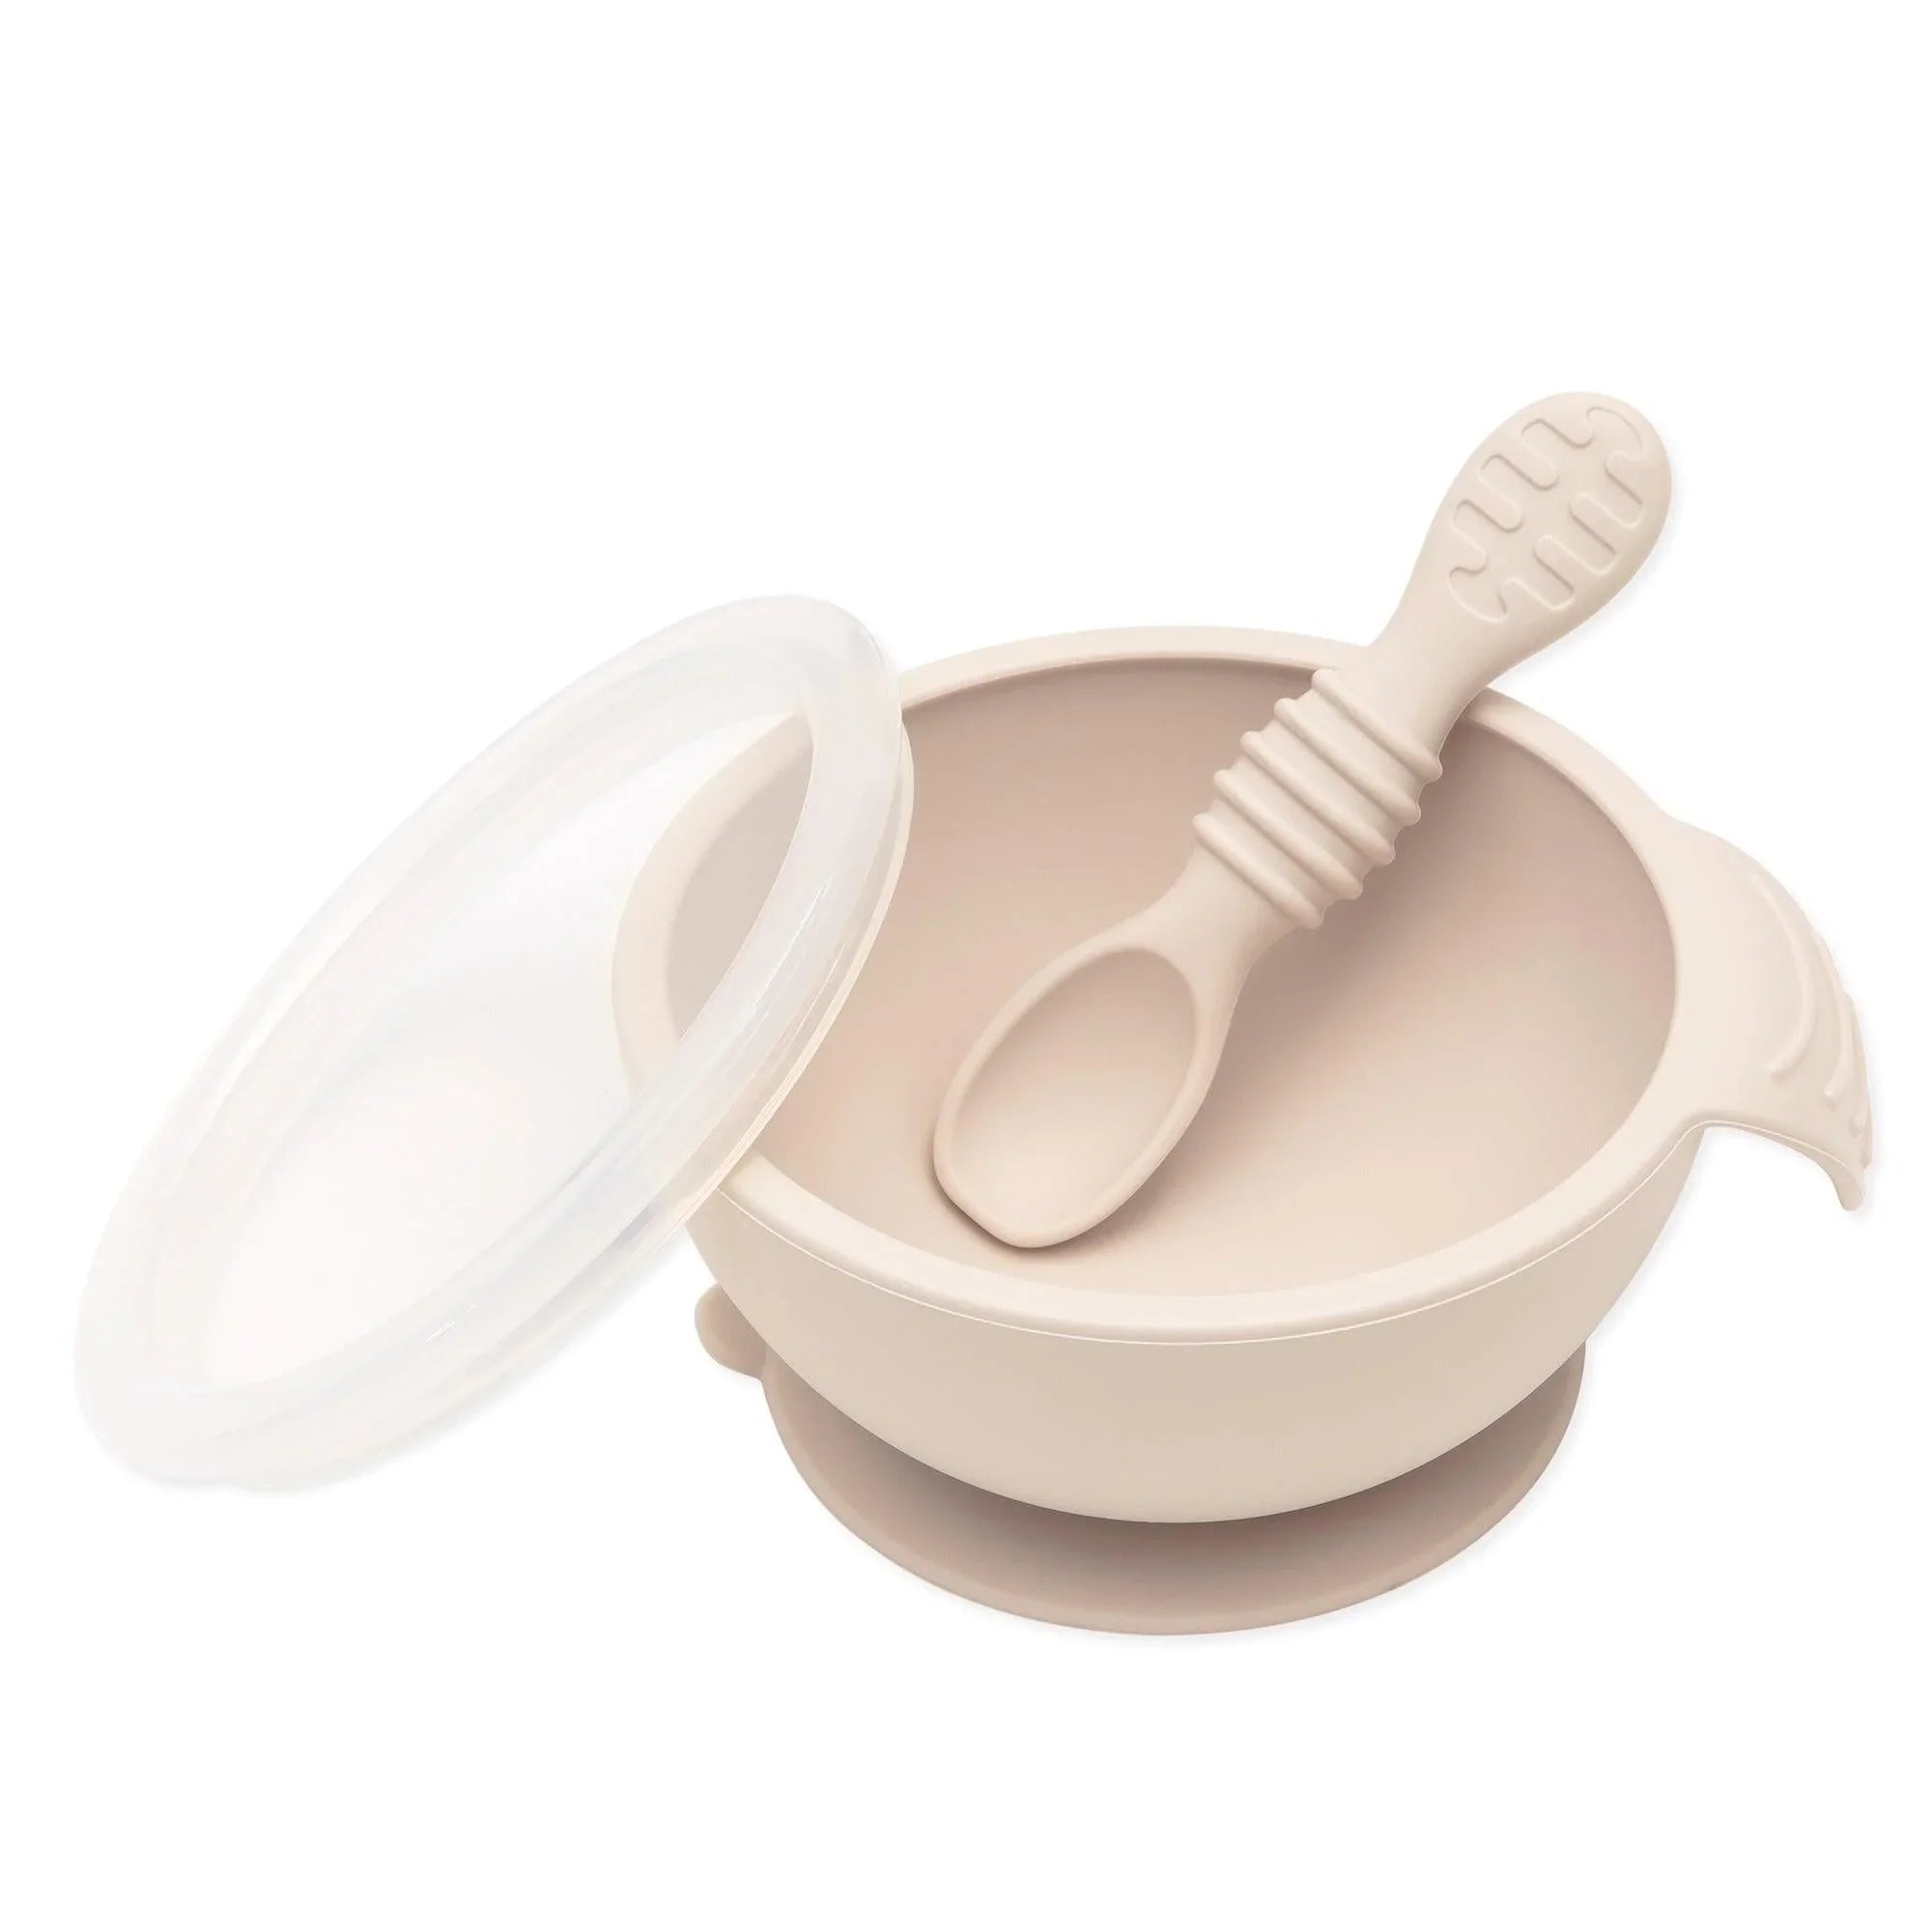 BPA-Free Silicone Baby Feeding Set with Bowl, Spoon & Lid